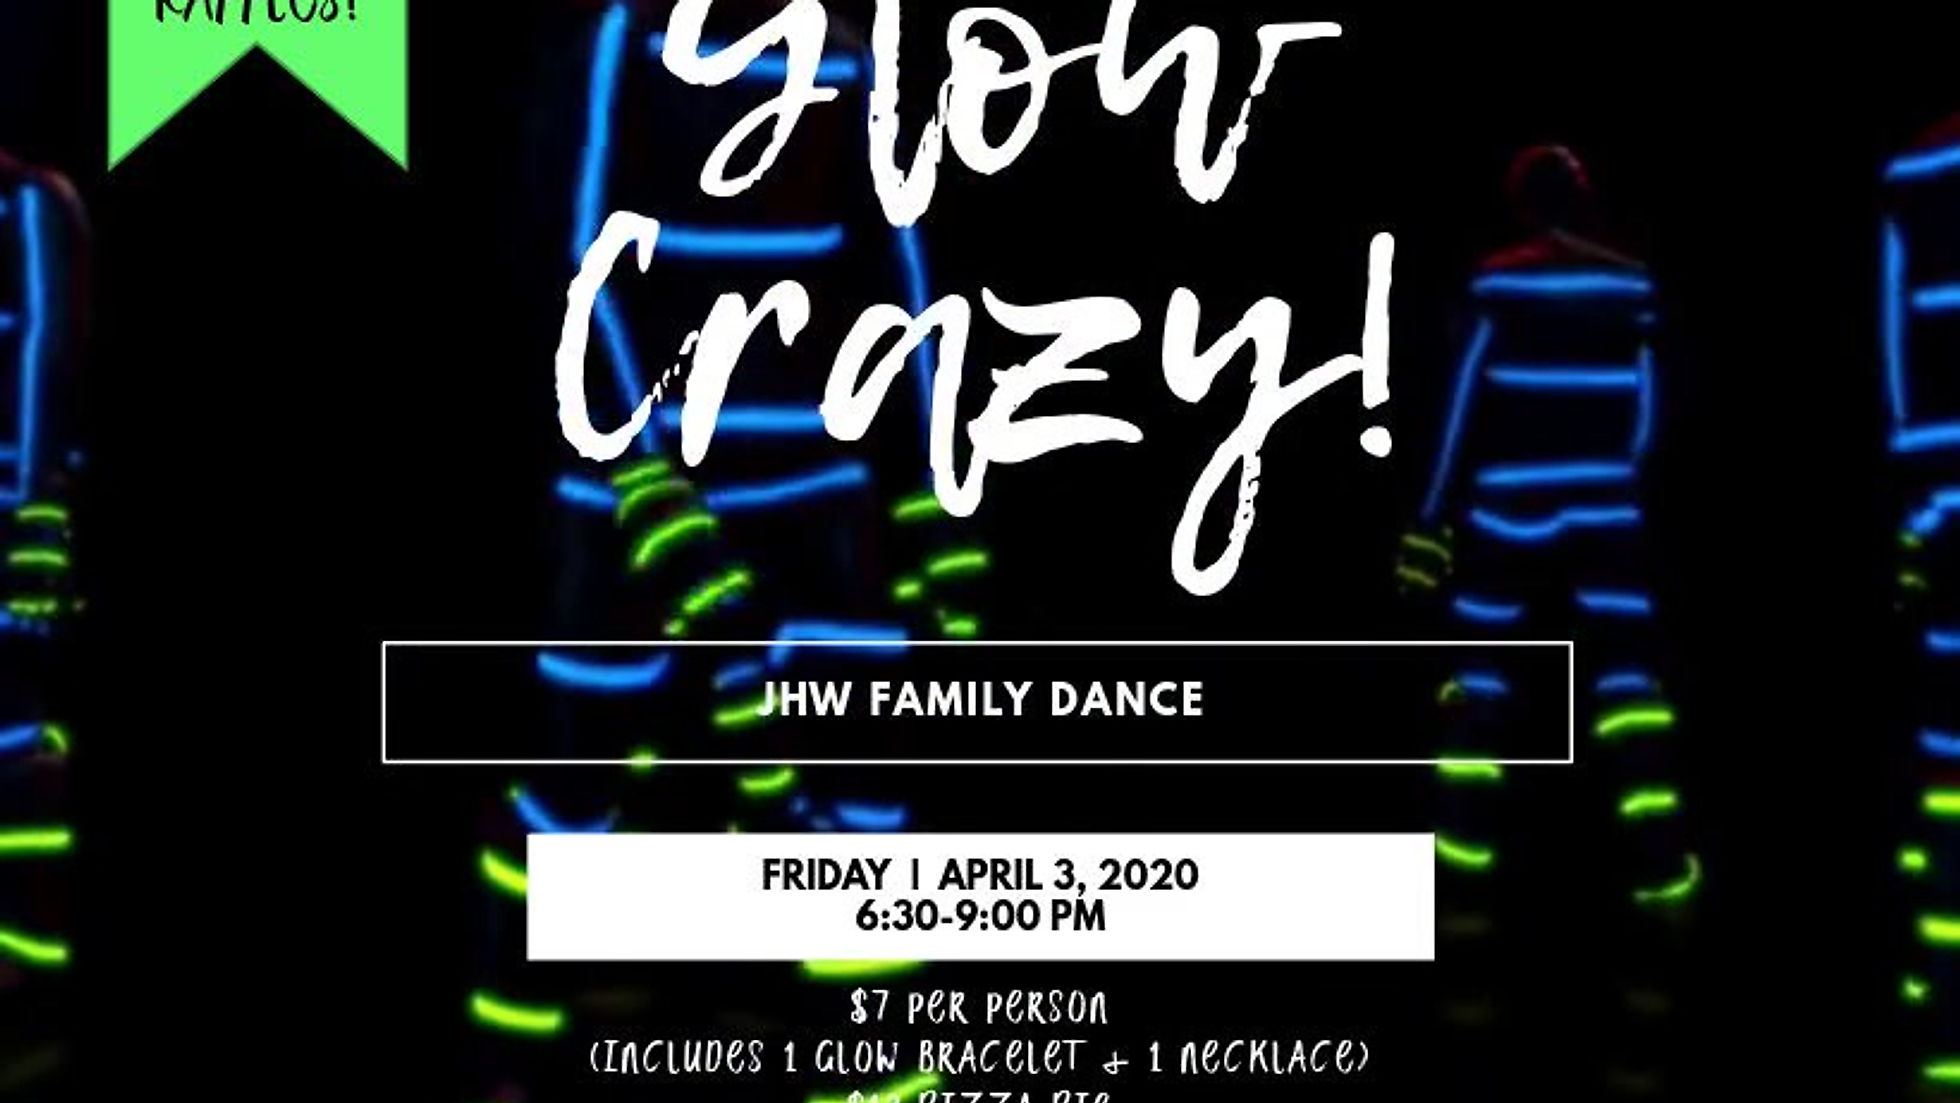 JHW 2020 Glow Dance